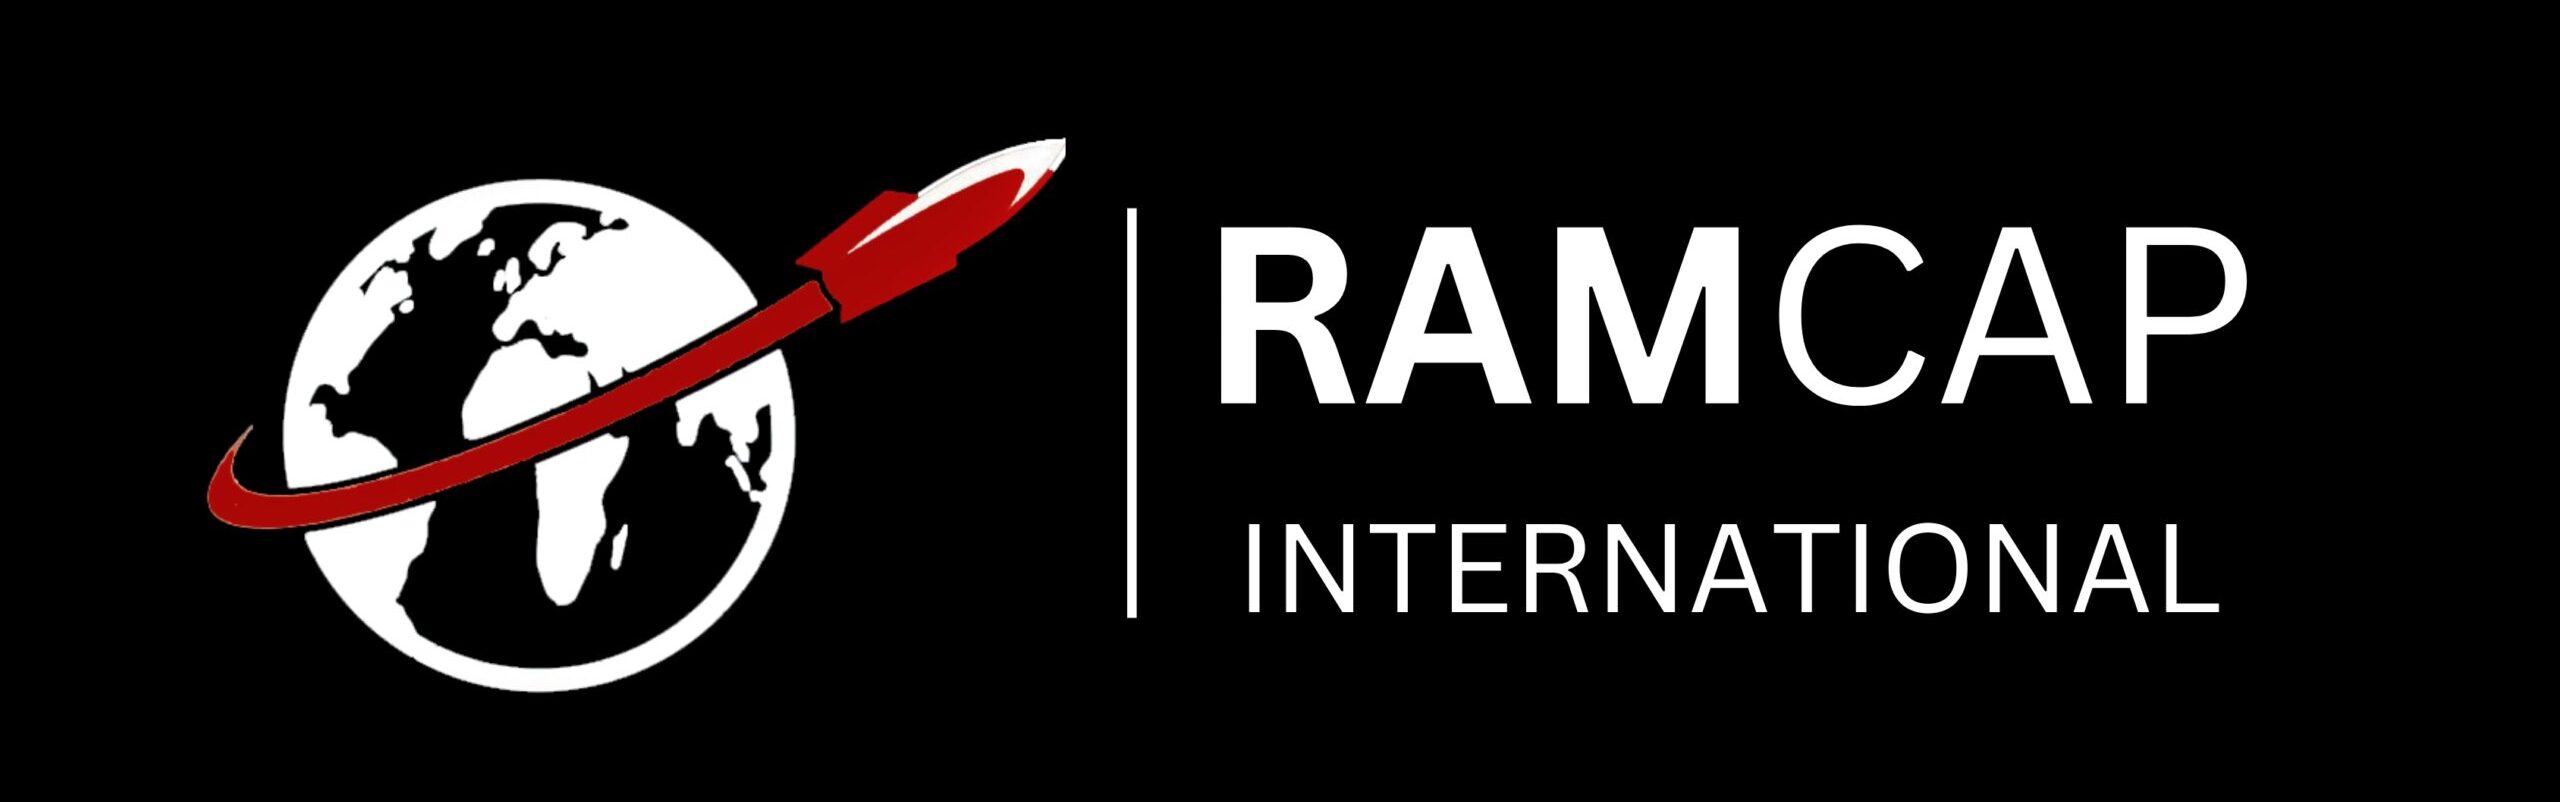 ramcap international logo